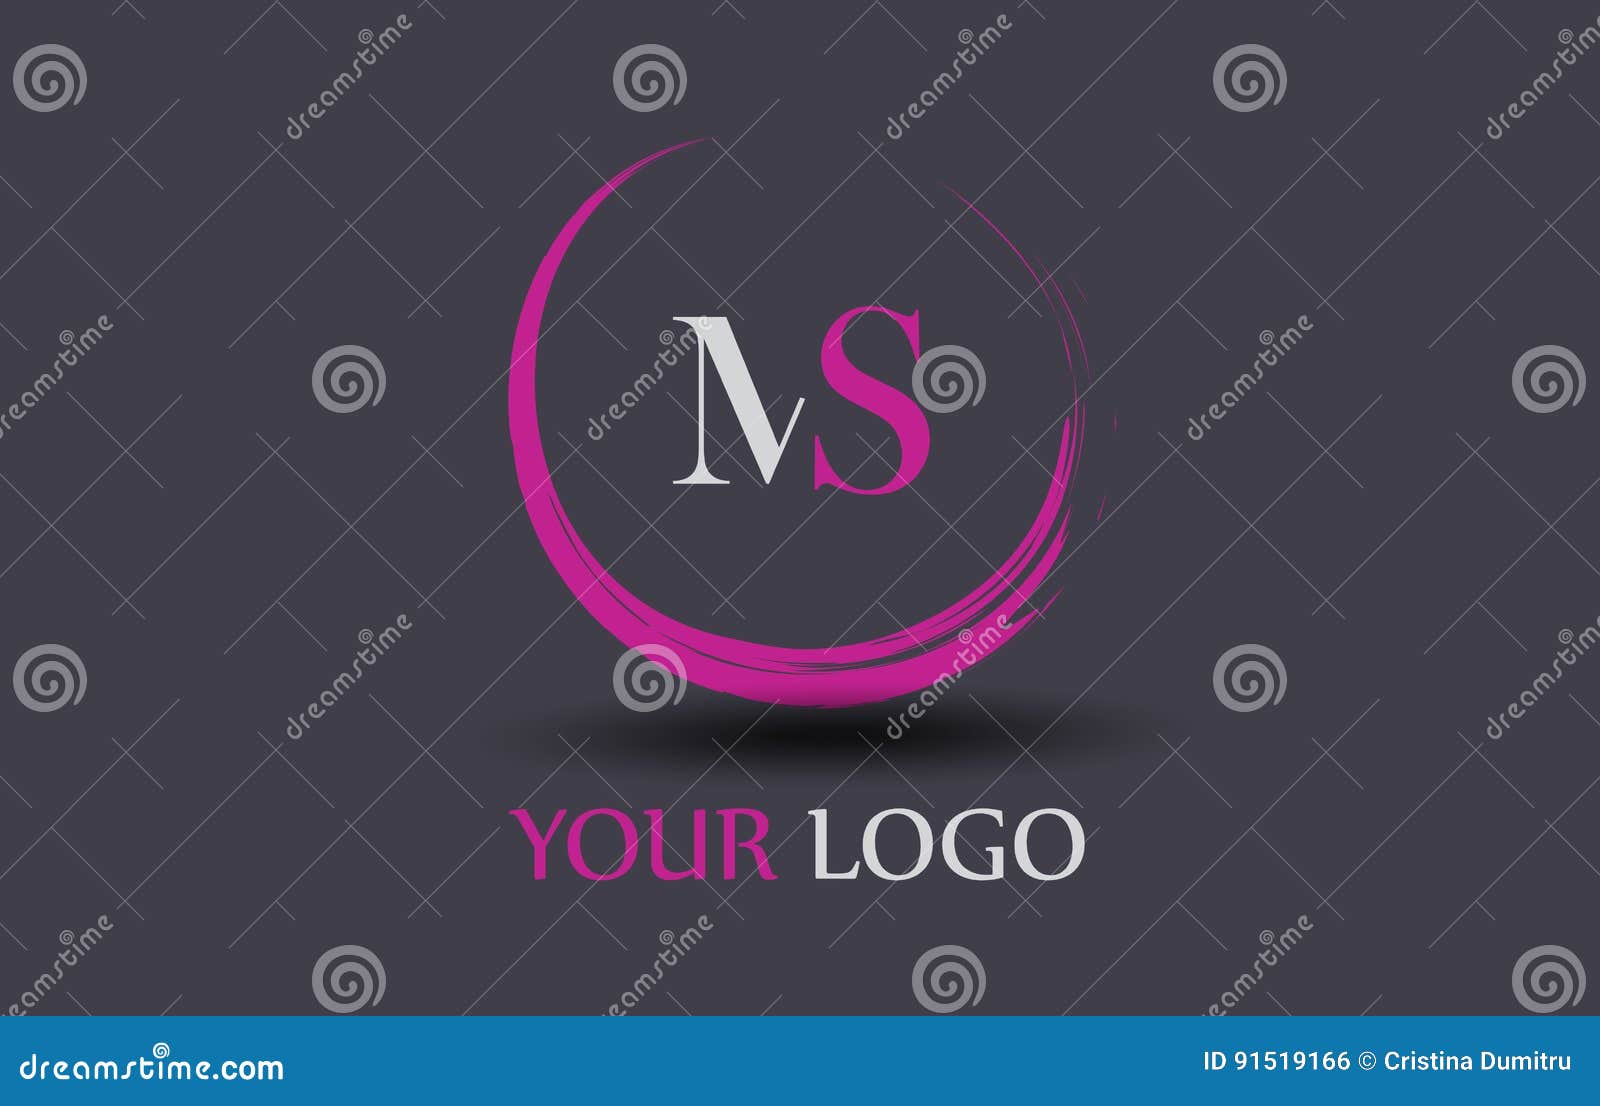 MS M S Letter Logo Design stock vector. Illustration of isolated ...